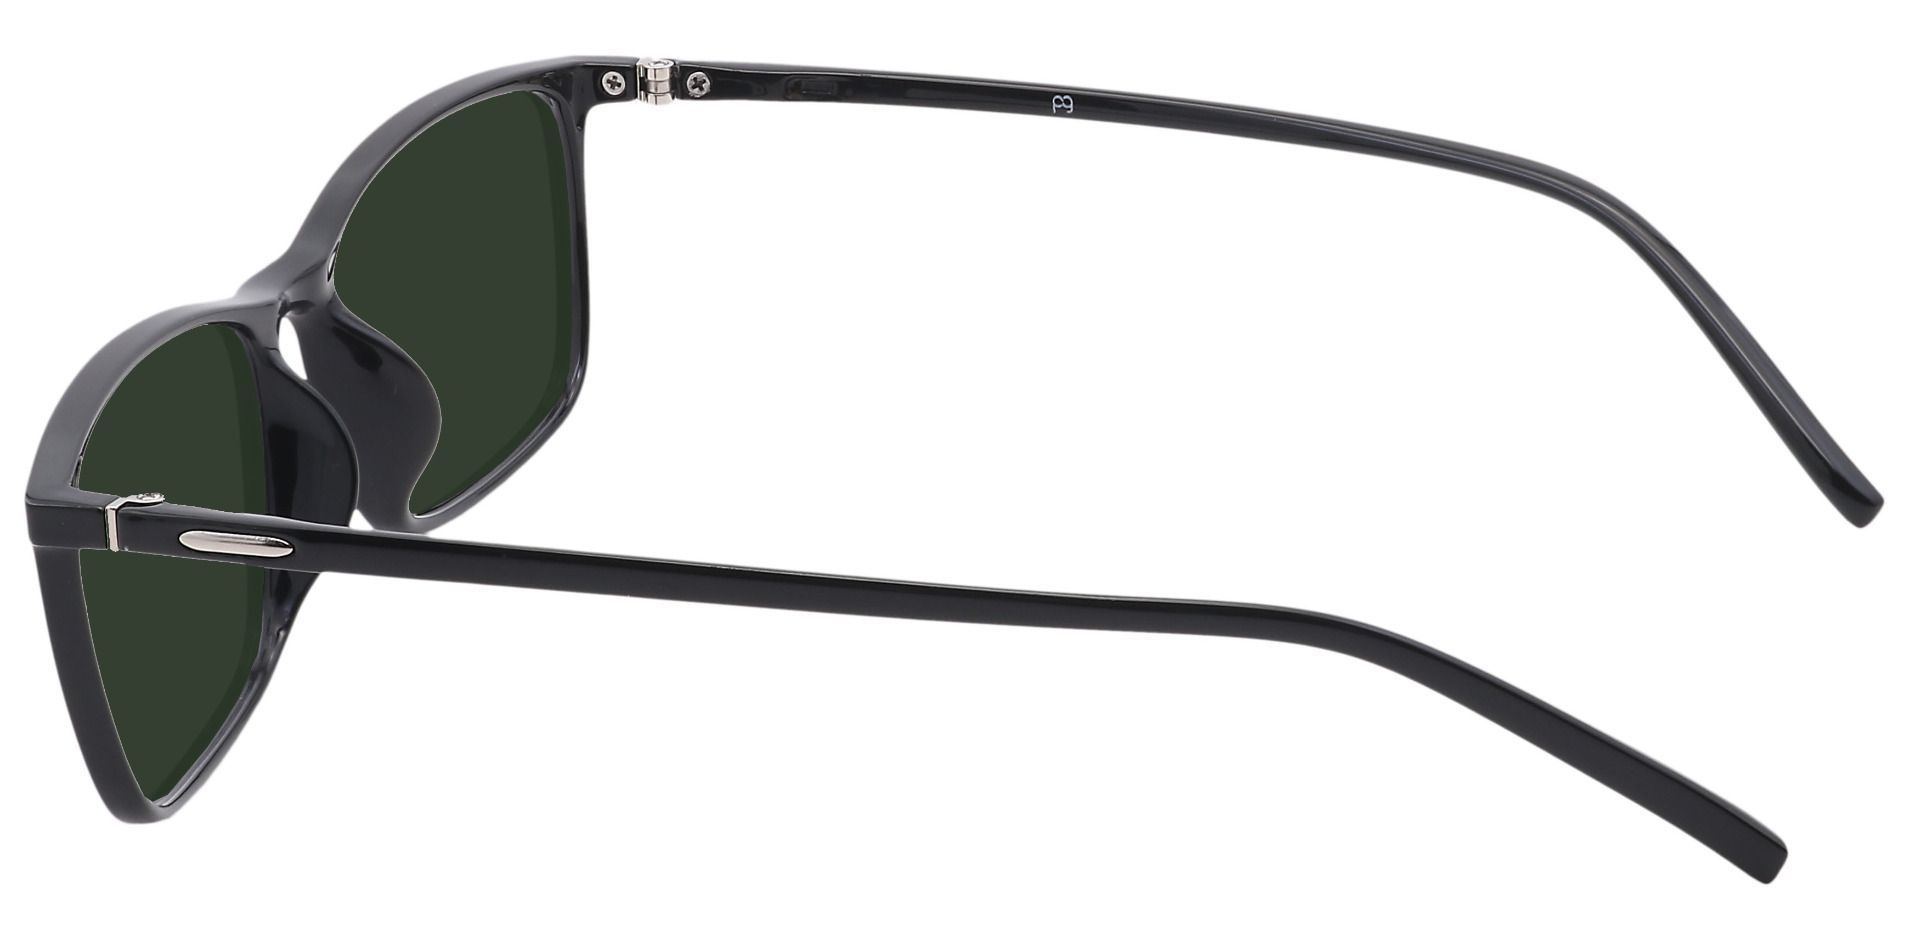 Fuji Rectangle Reading Sunglasses - Black Frame With Green Lenses